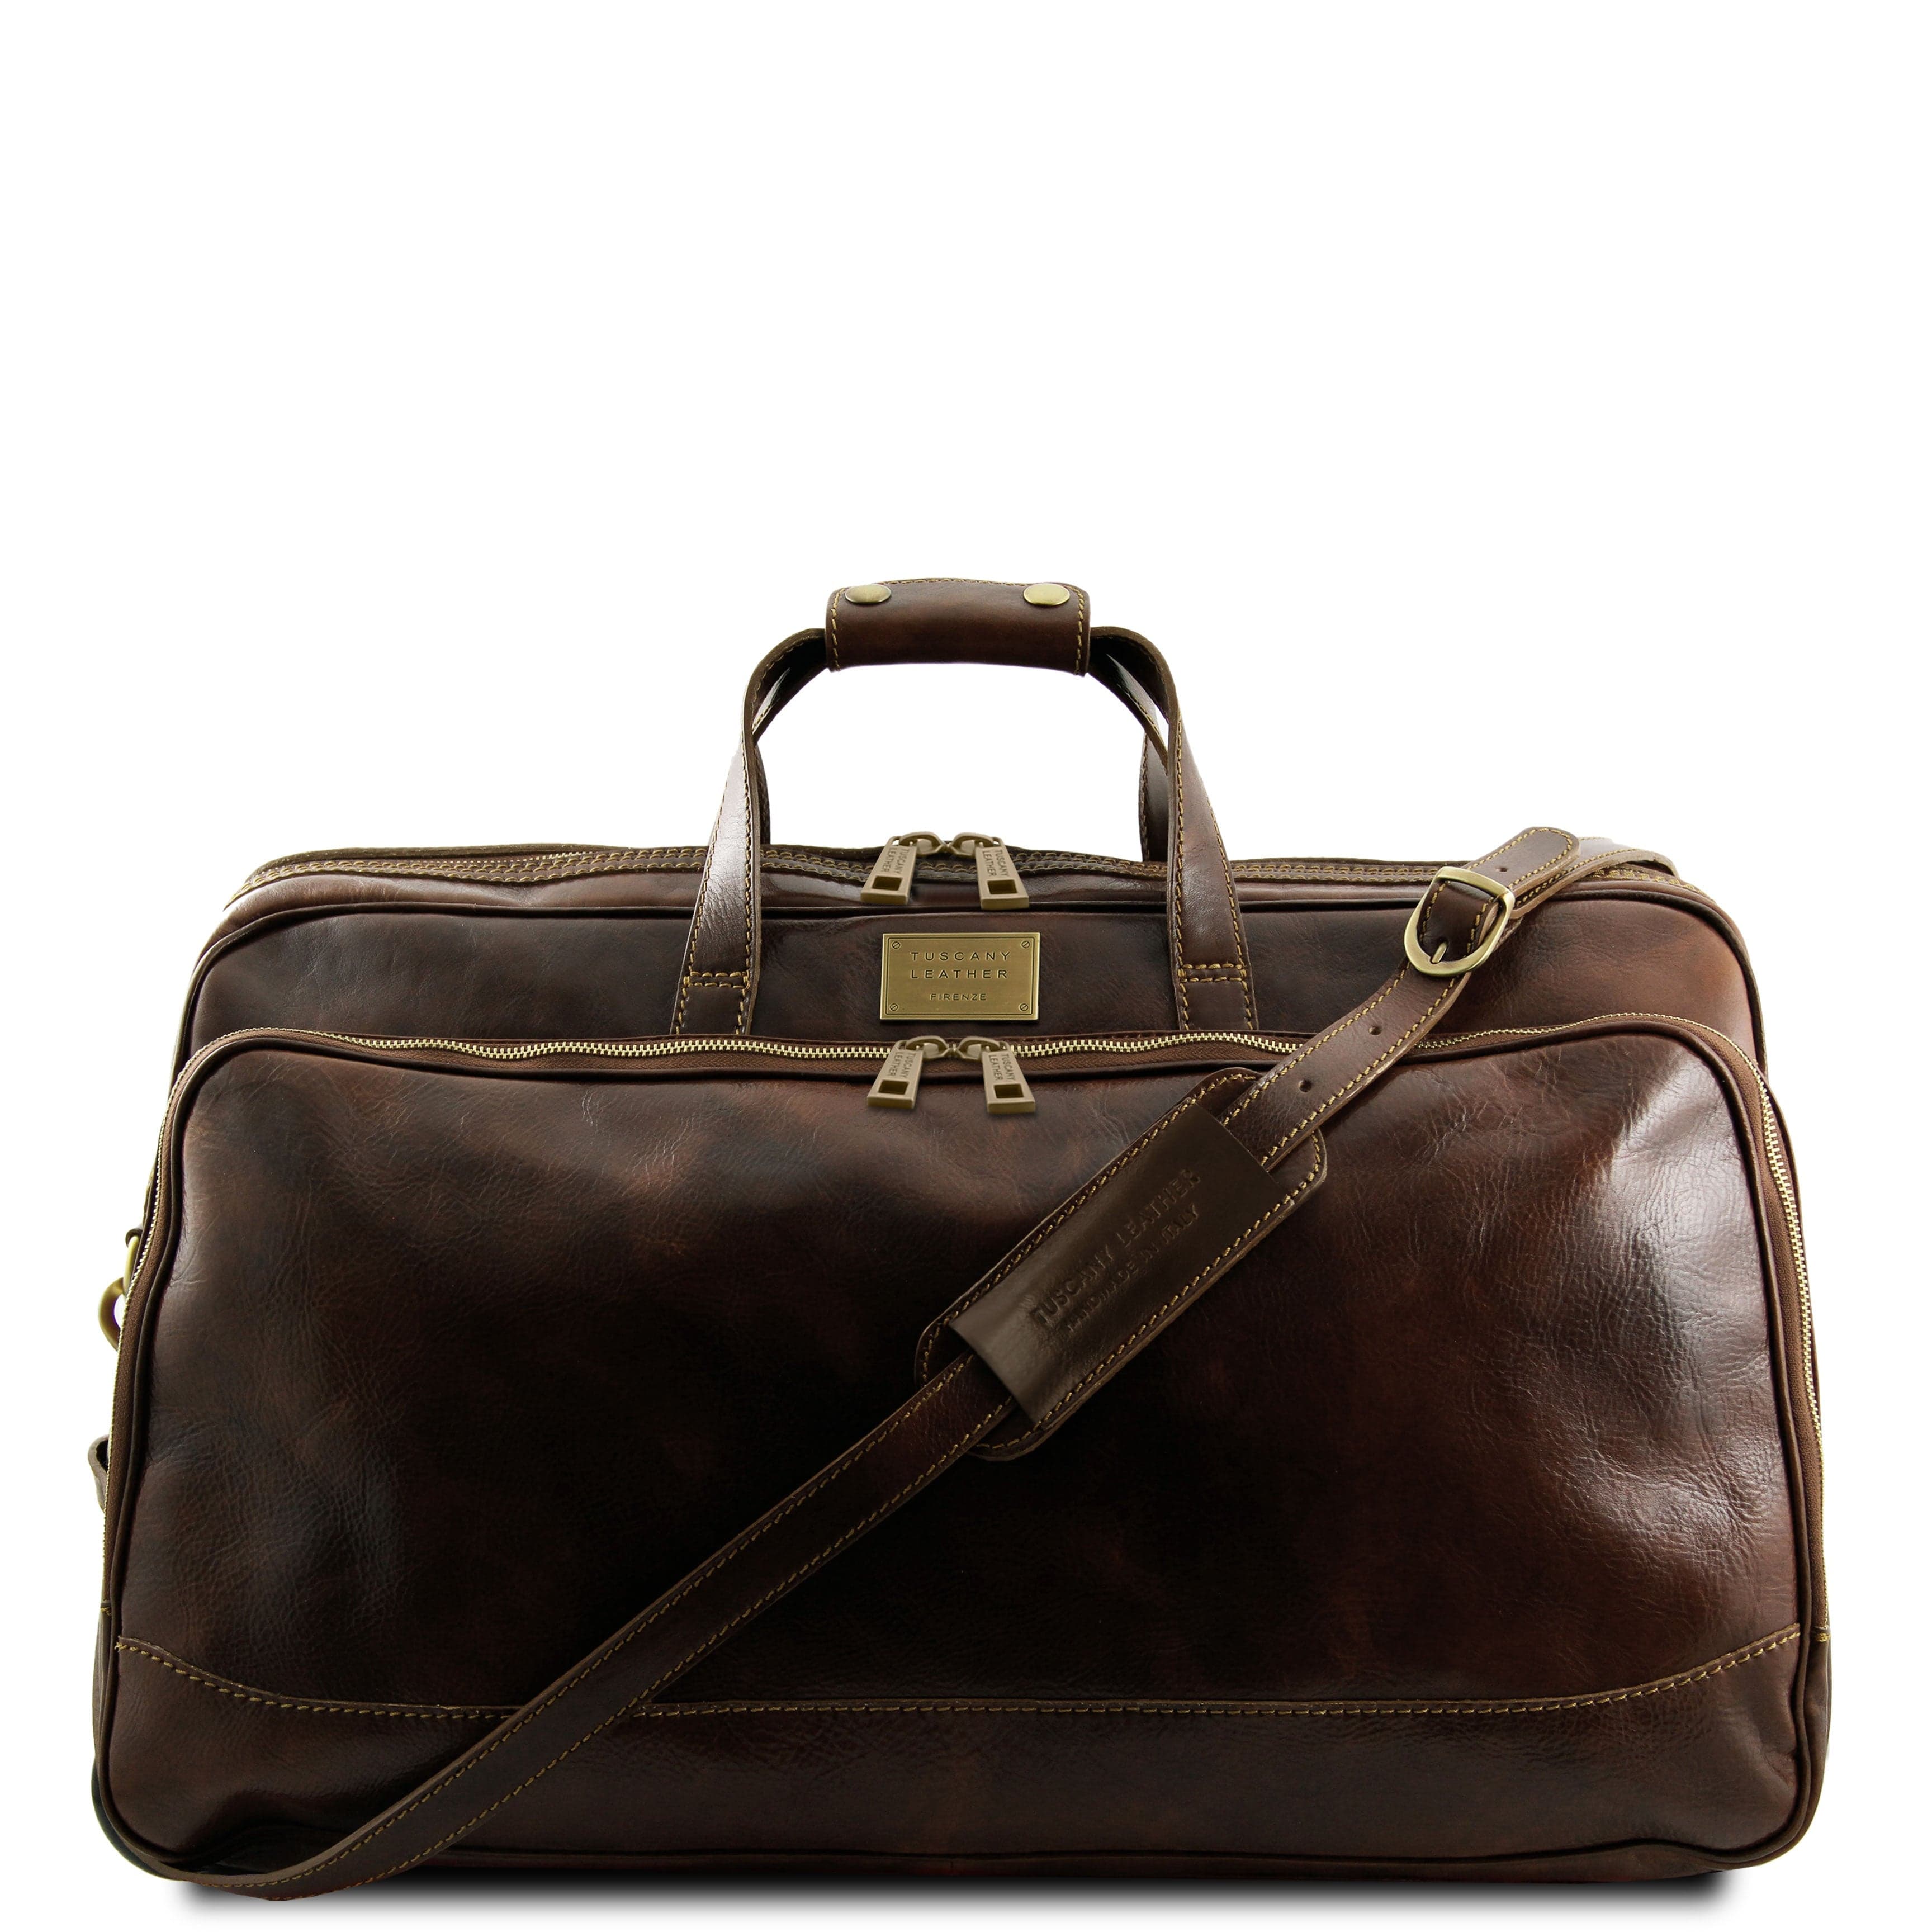 Bora Bora - Trolley leather bag - Small size | TL3065 | Tuscany Leather ...